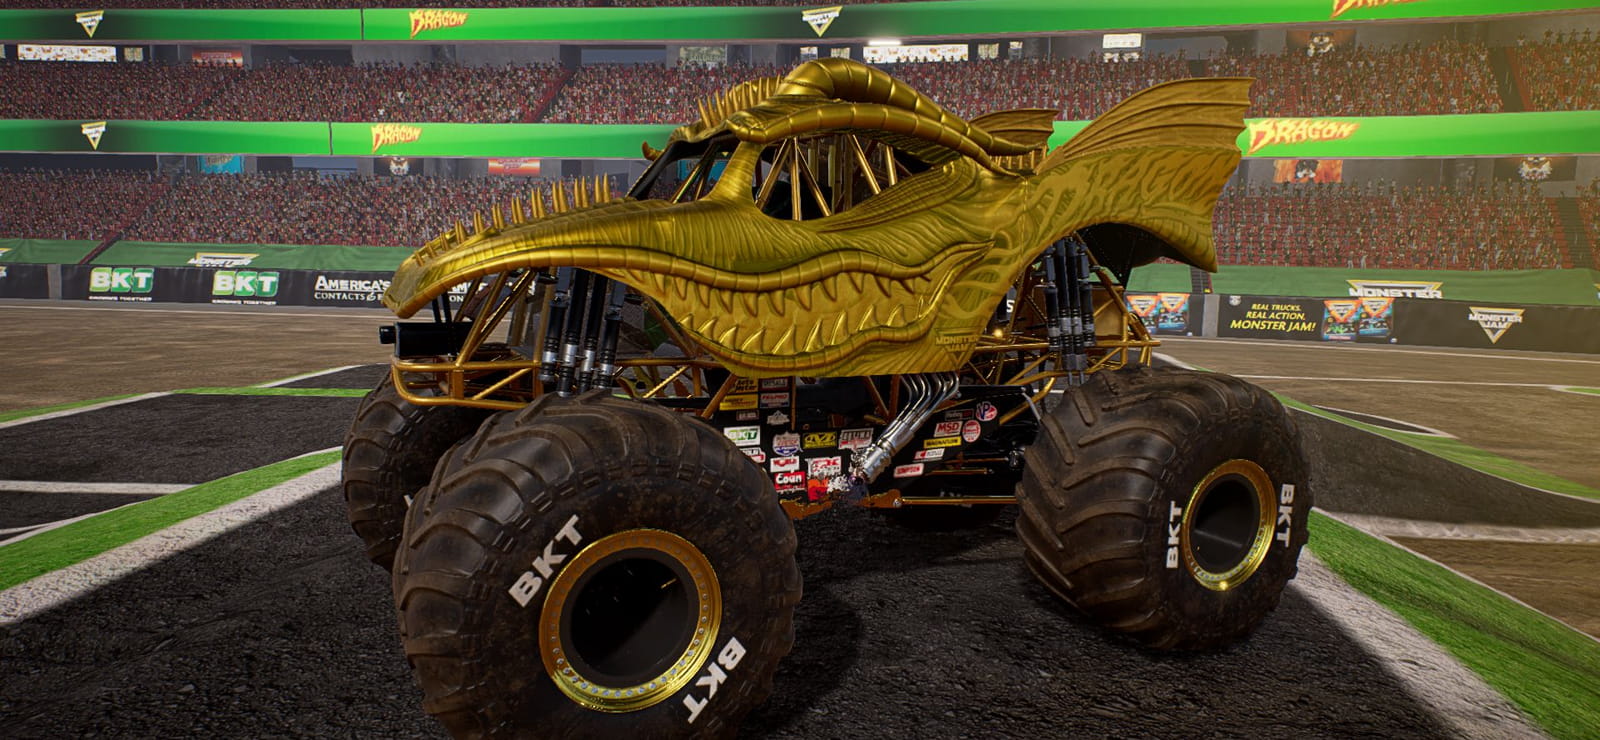 Monster Jam Steel Titans - Gold Truck Bundle